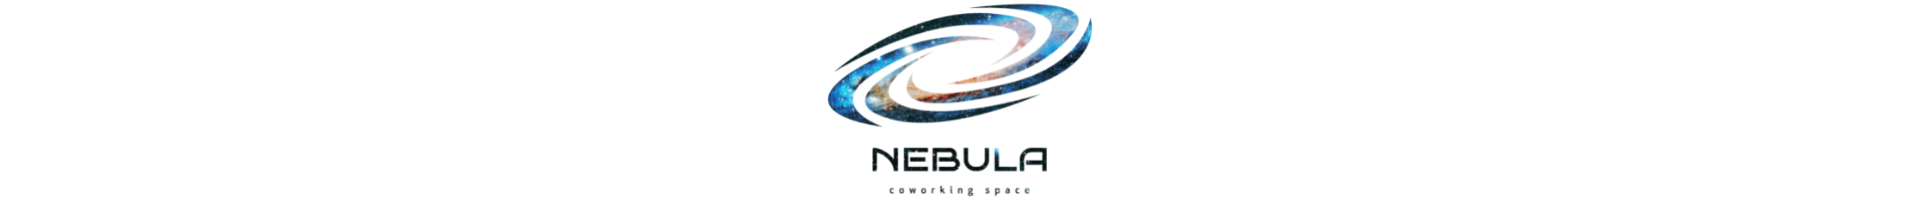 Nebula Coworking Space